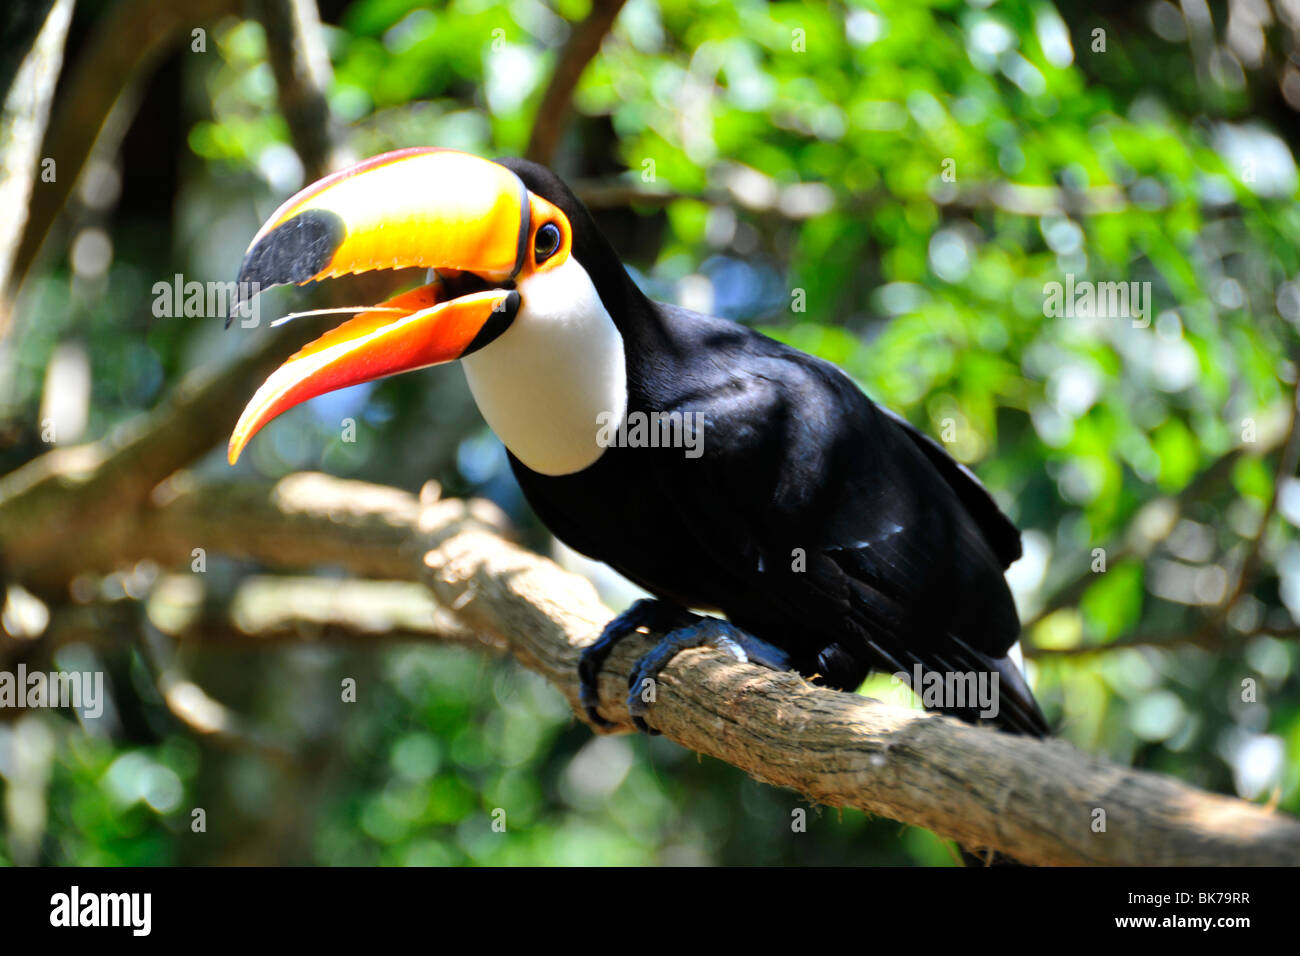 Toucan bird -Fotos und -Bildmaterial in hoher Auflösung – Alamy